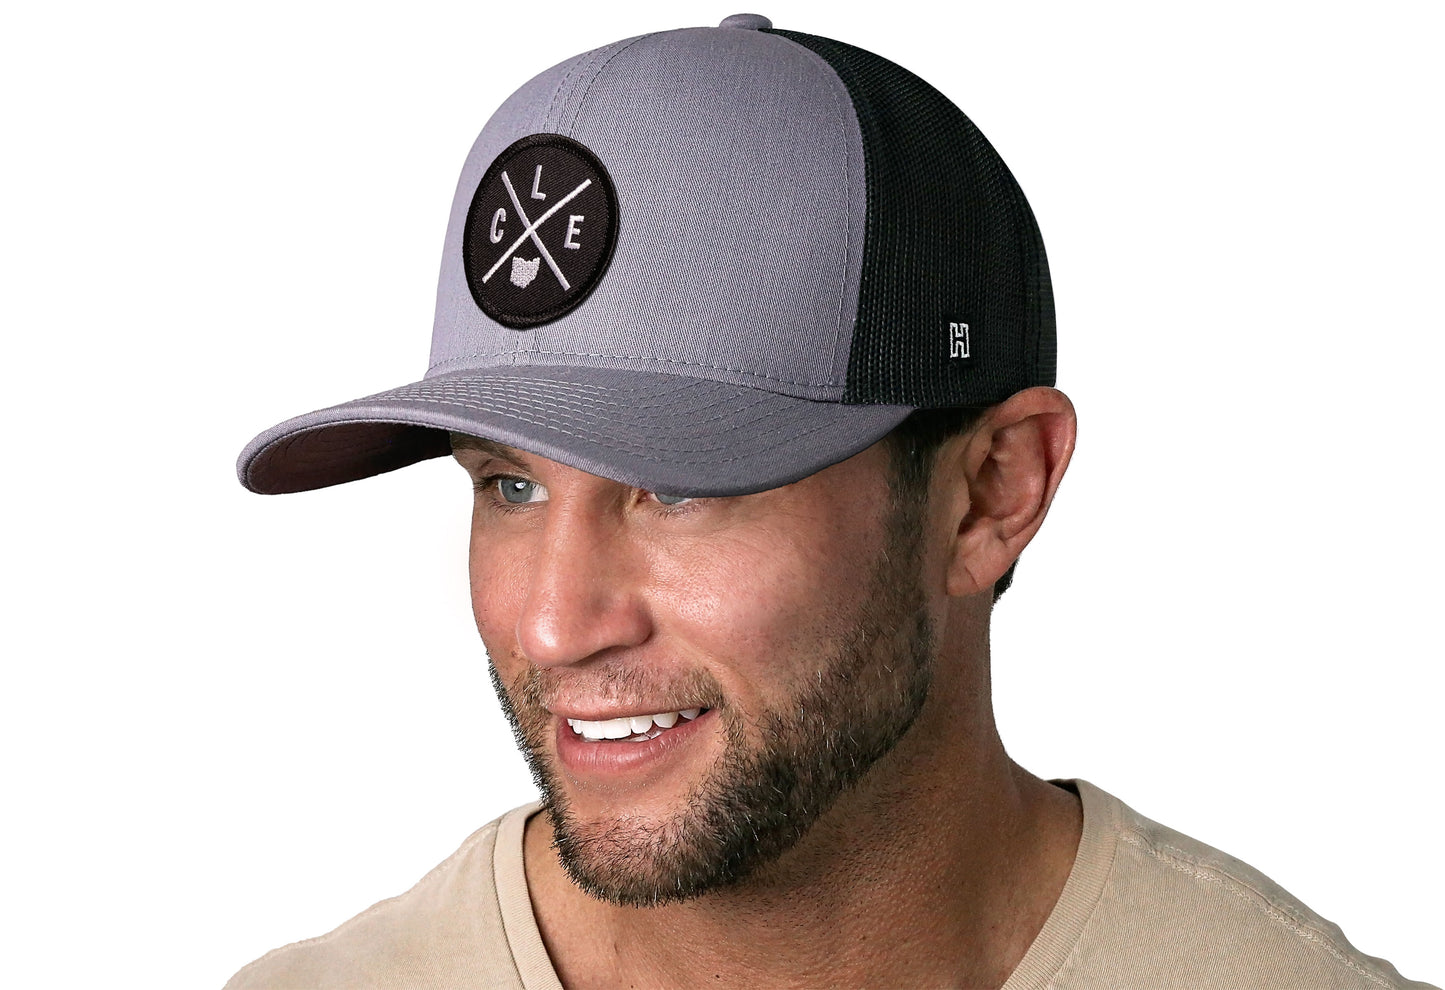 Cleveland Trucker Hat  |  Gray Black CLE Snapback